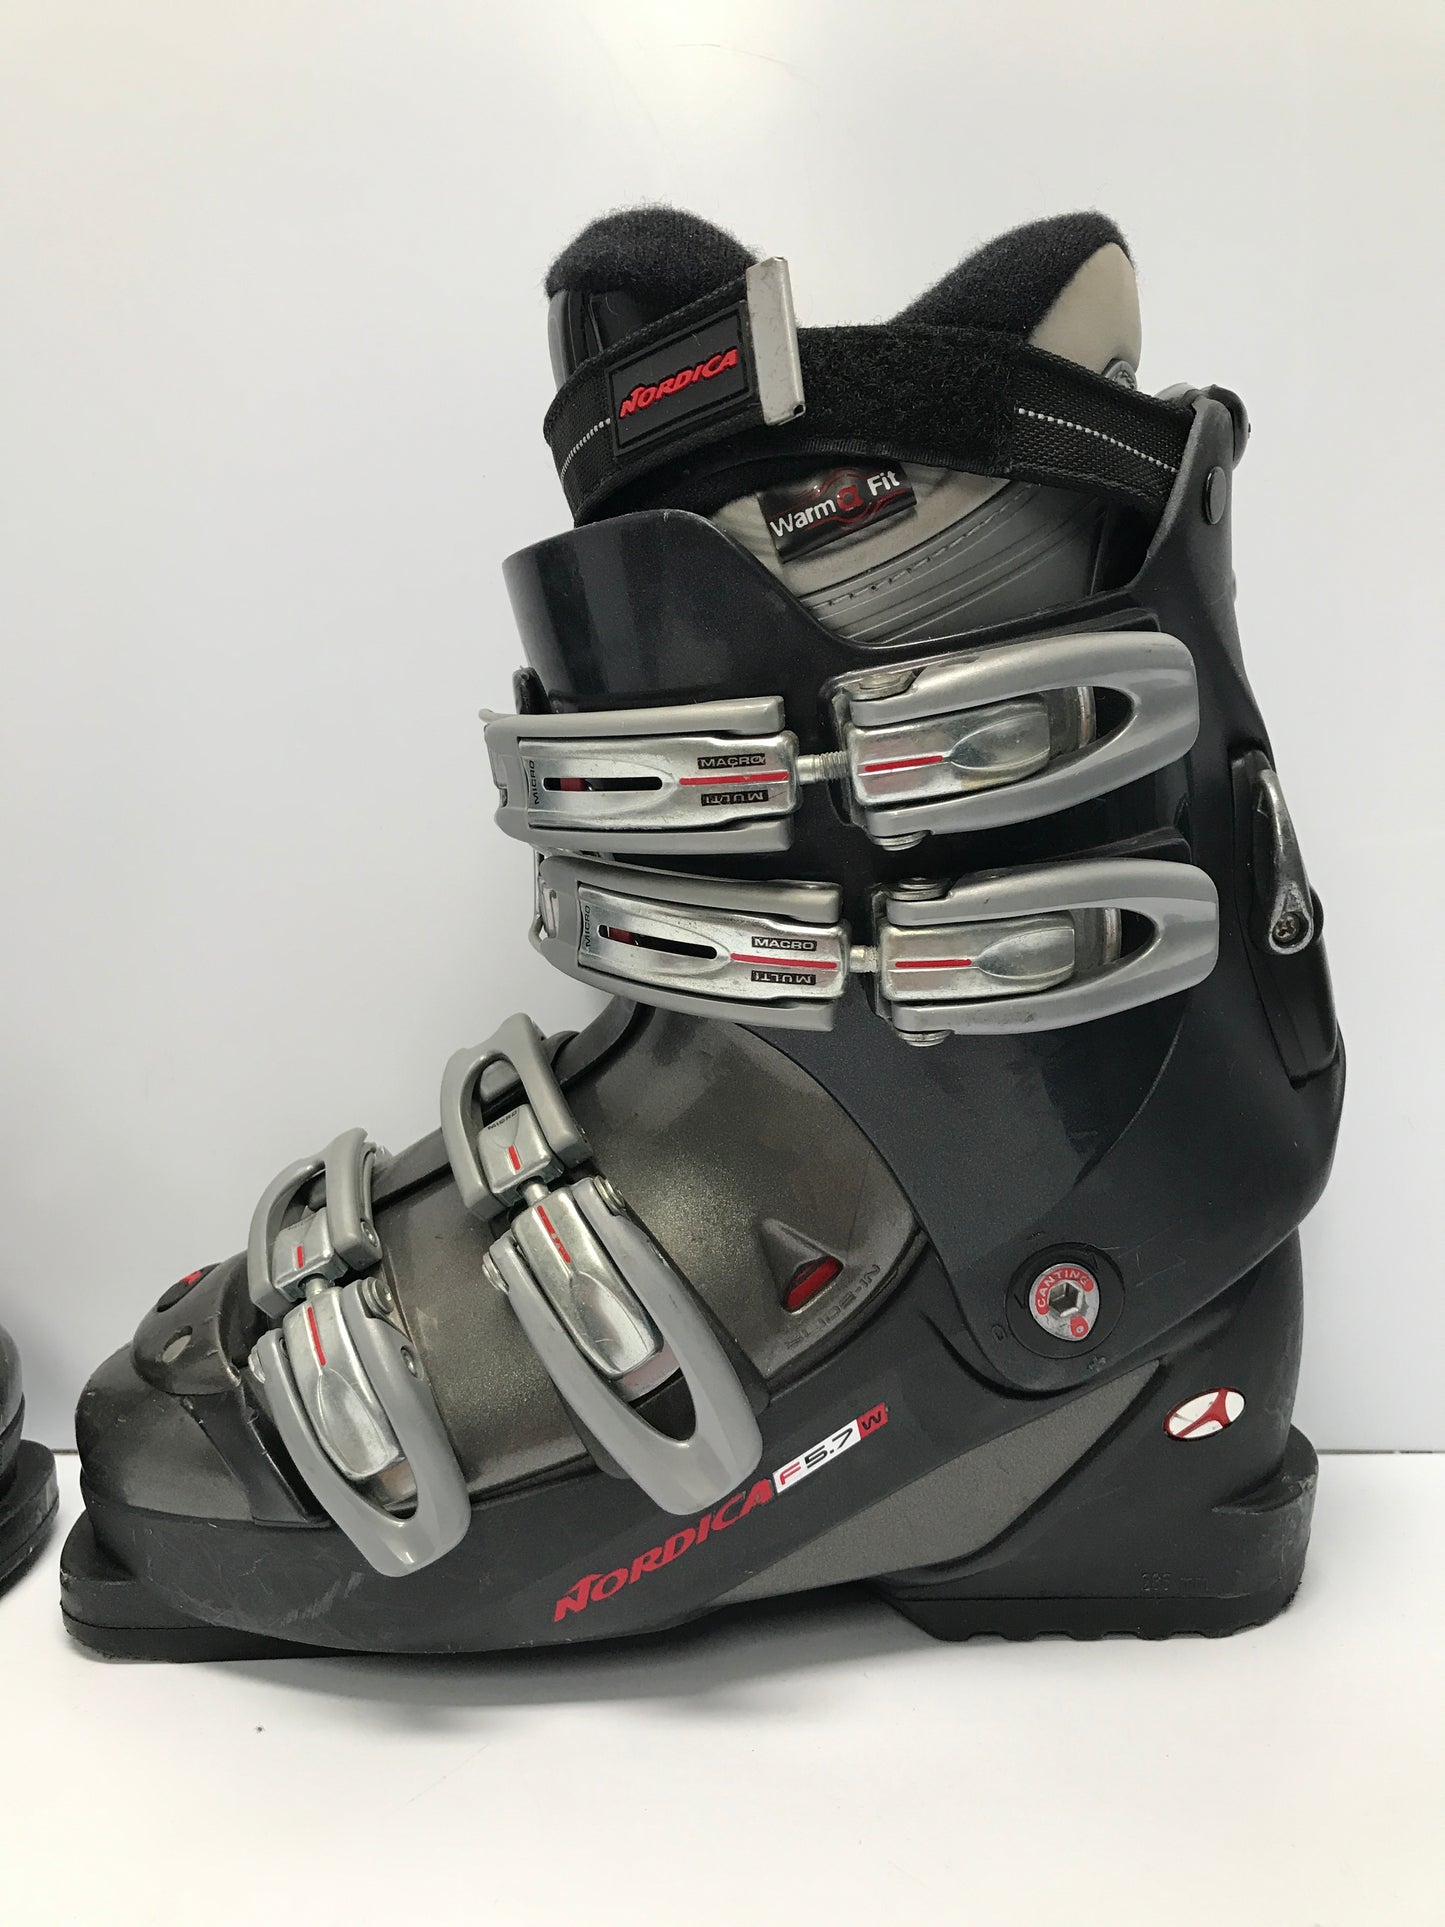 Ski Boots Mondo Size 24.5 Men's Size 6 Ladies Size 7 285 mm Nordica Grey Red